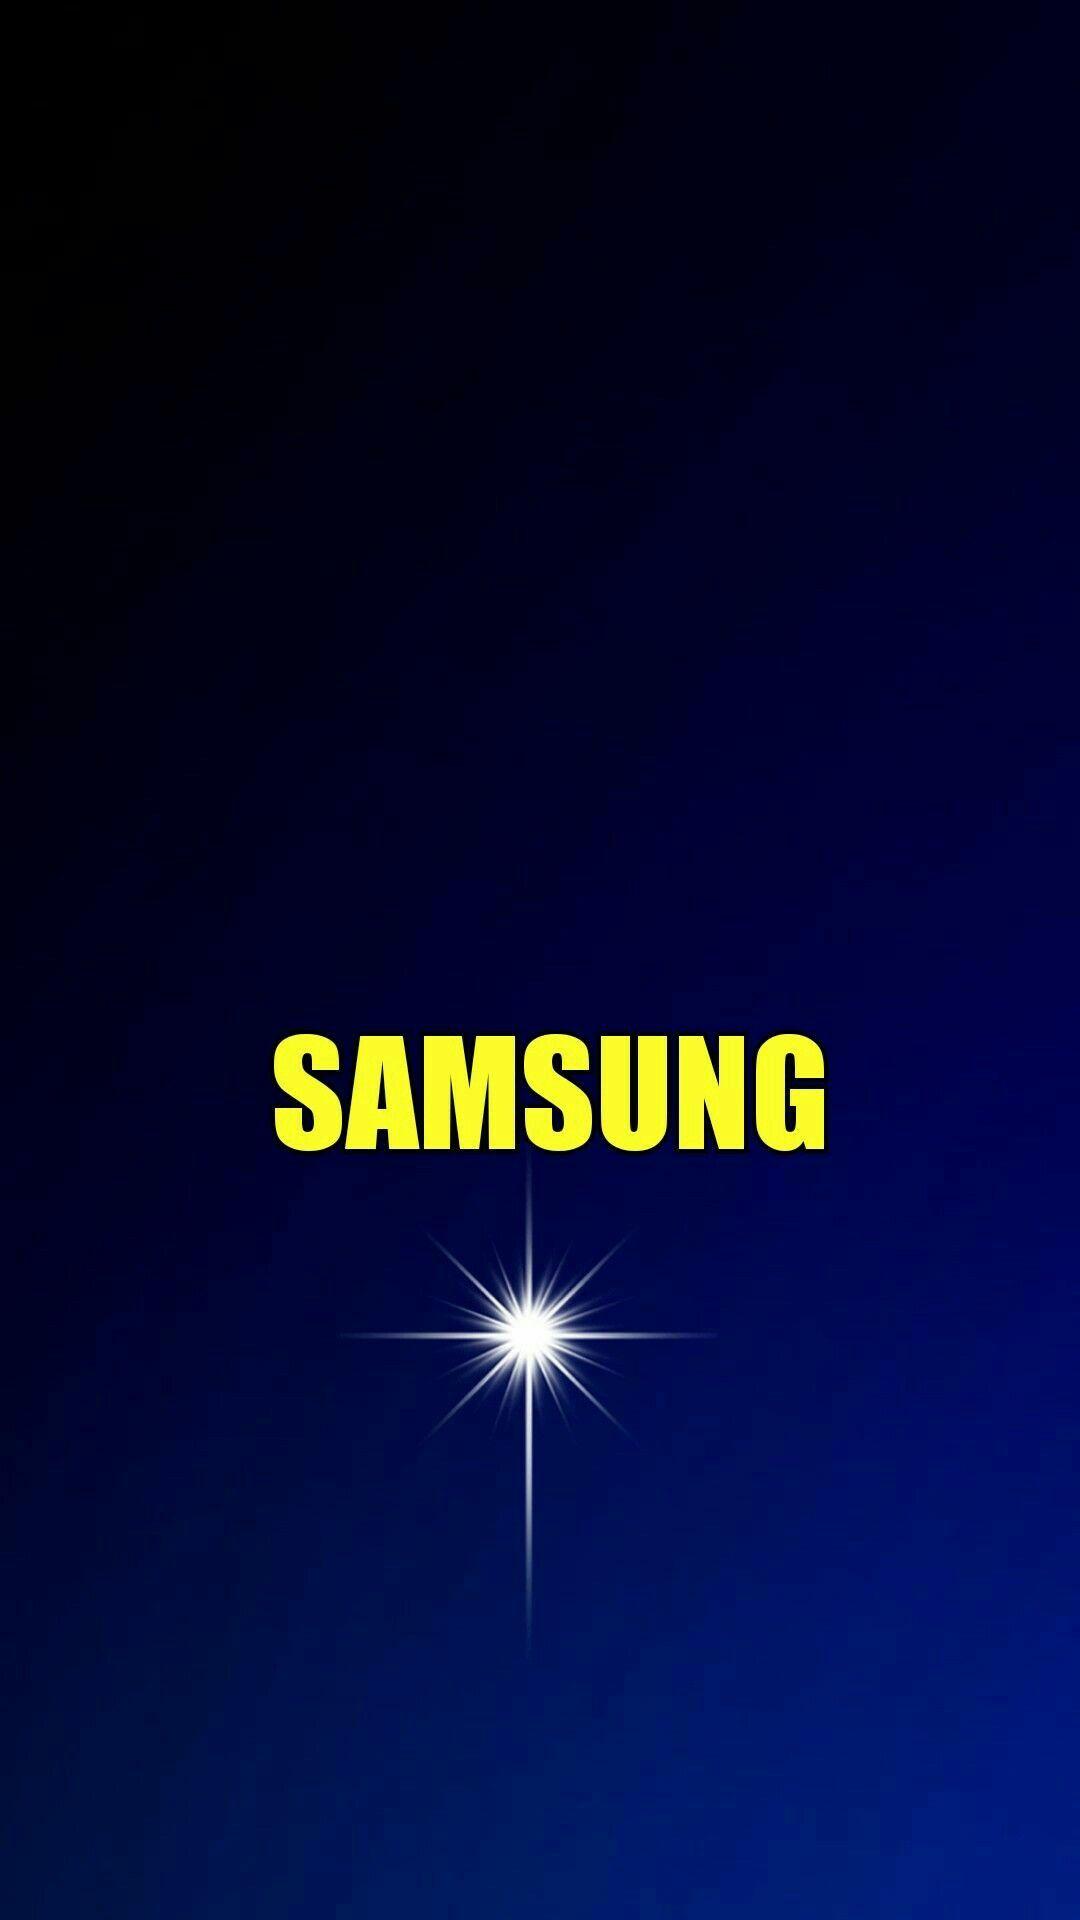 Logo Samsung Full HD